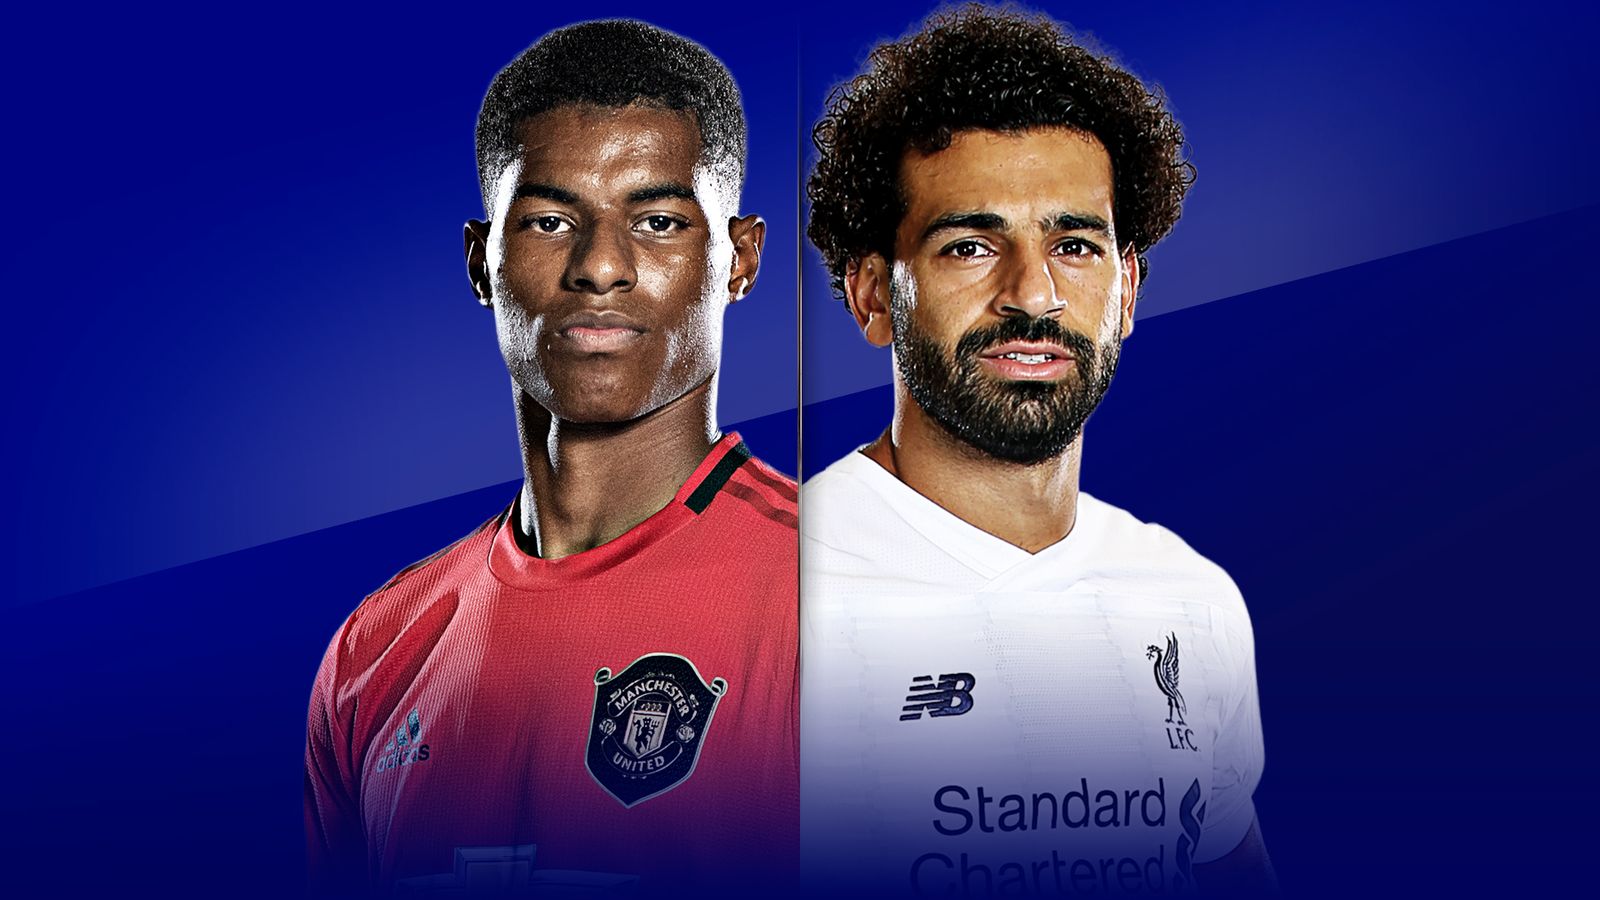 Match Preview - Man Utd vs Liverpool | 20 Oct 2019